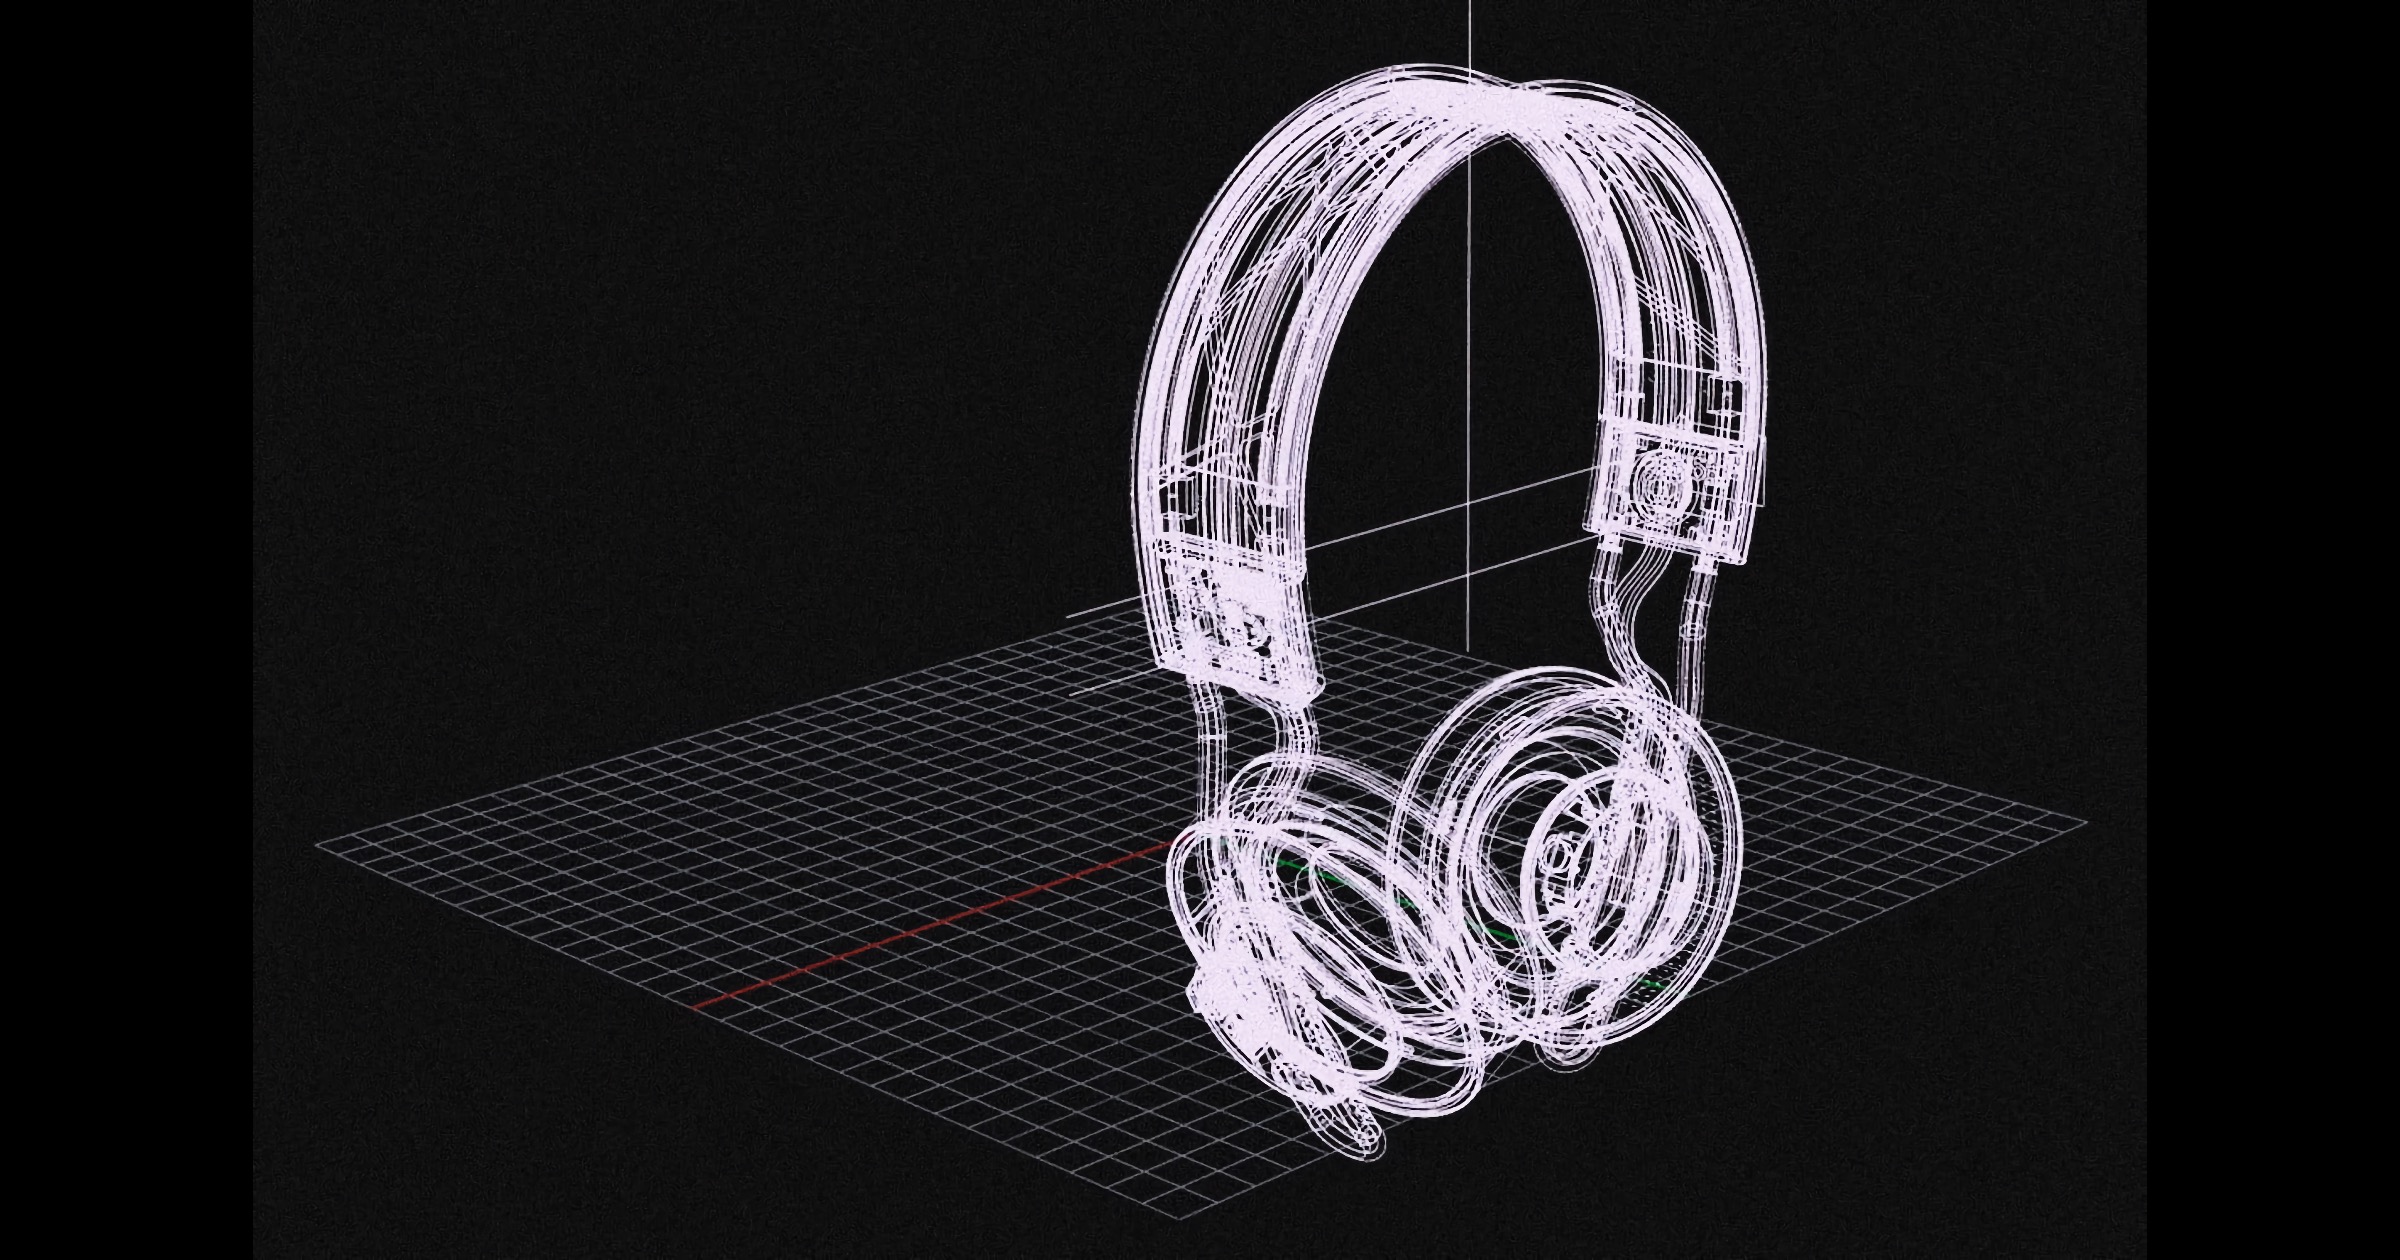 Adidas solar powered headphones concept image